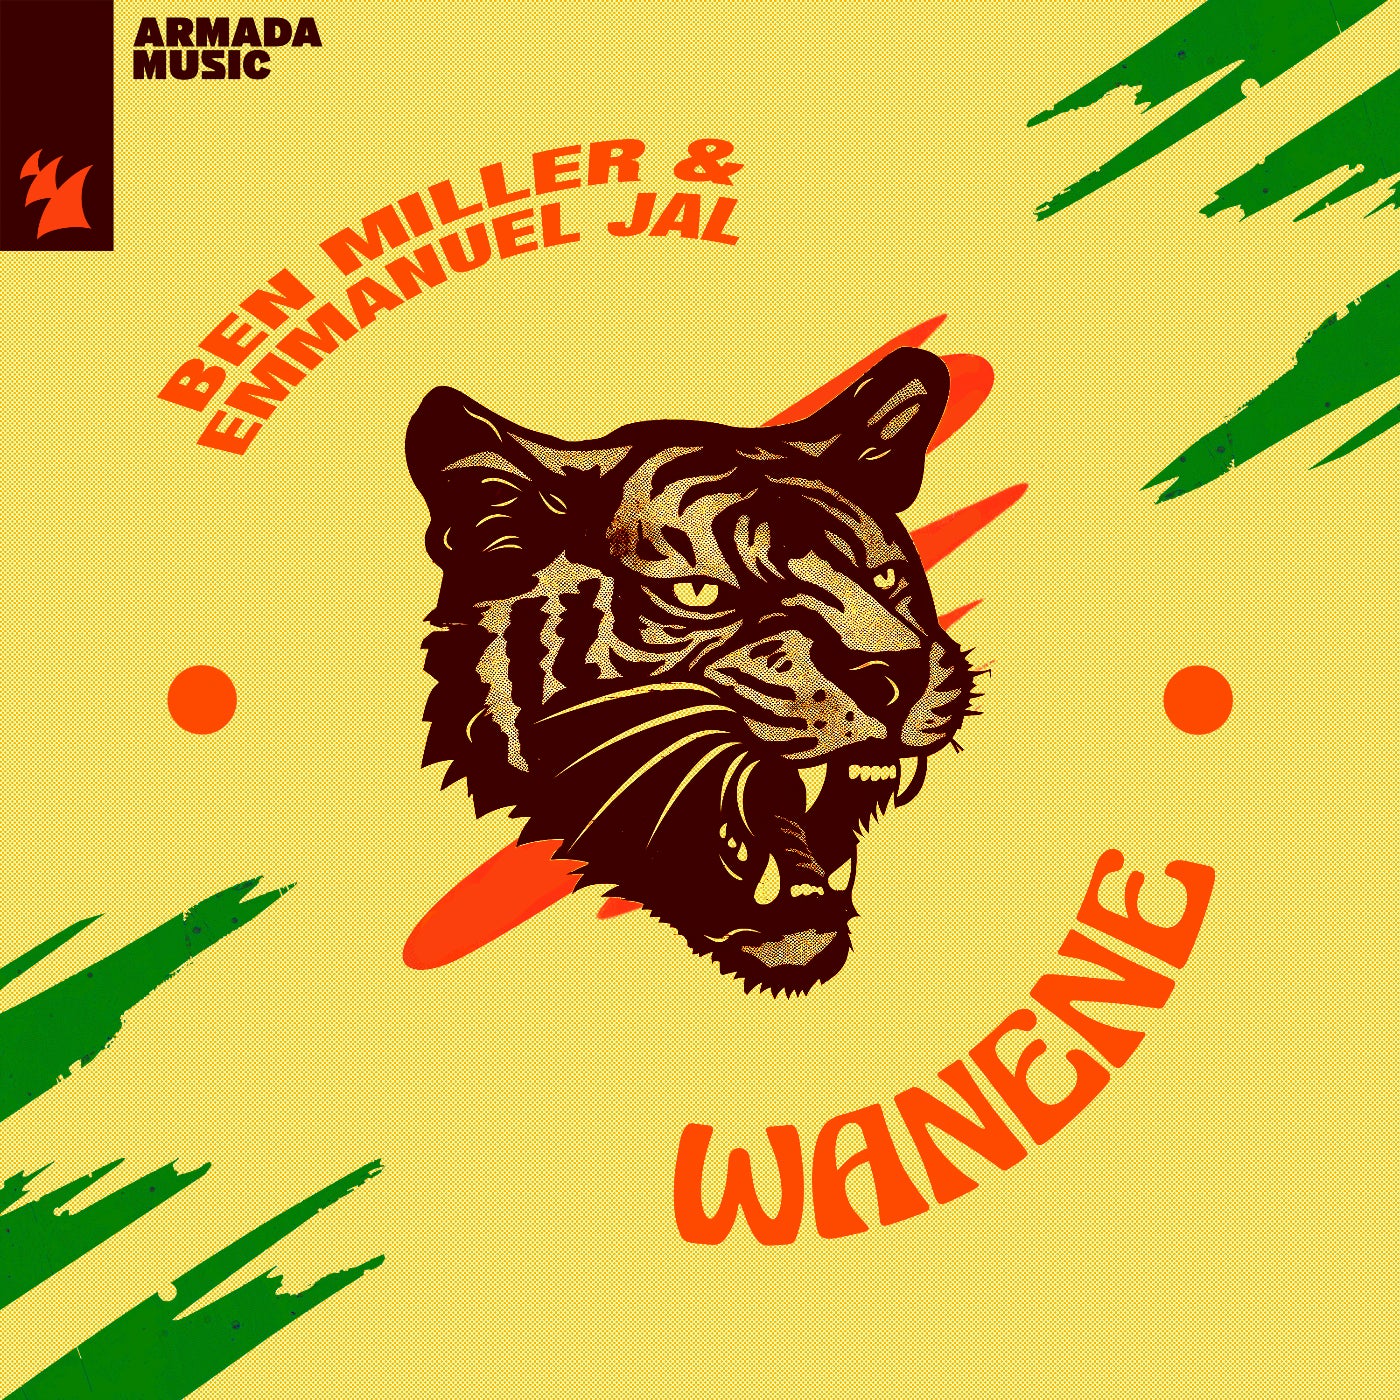 image cover: Emmanuel Jal, Ben Miller (Aus) - Wanene on Armada Music